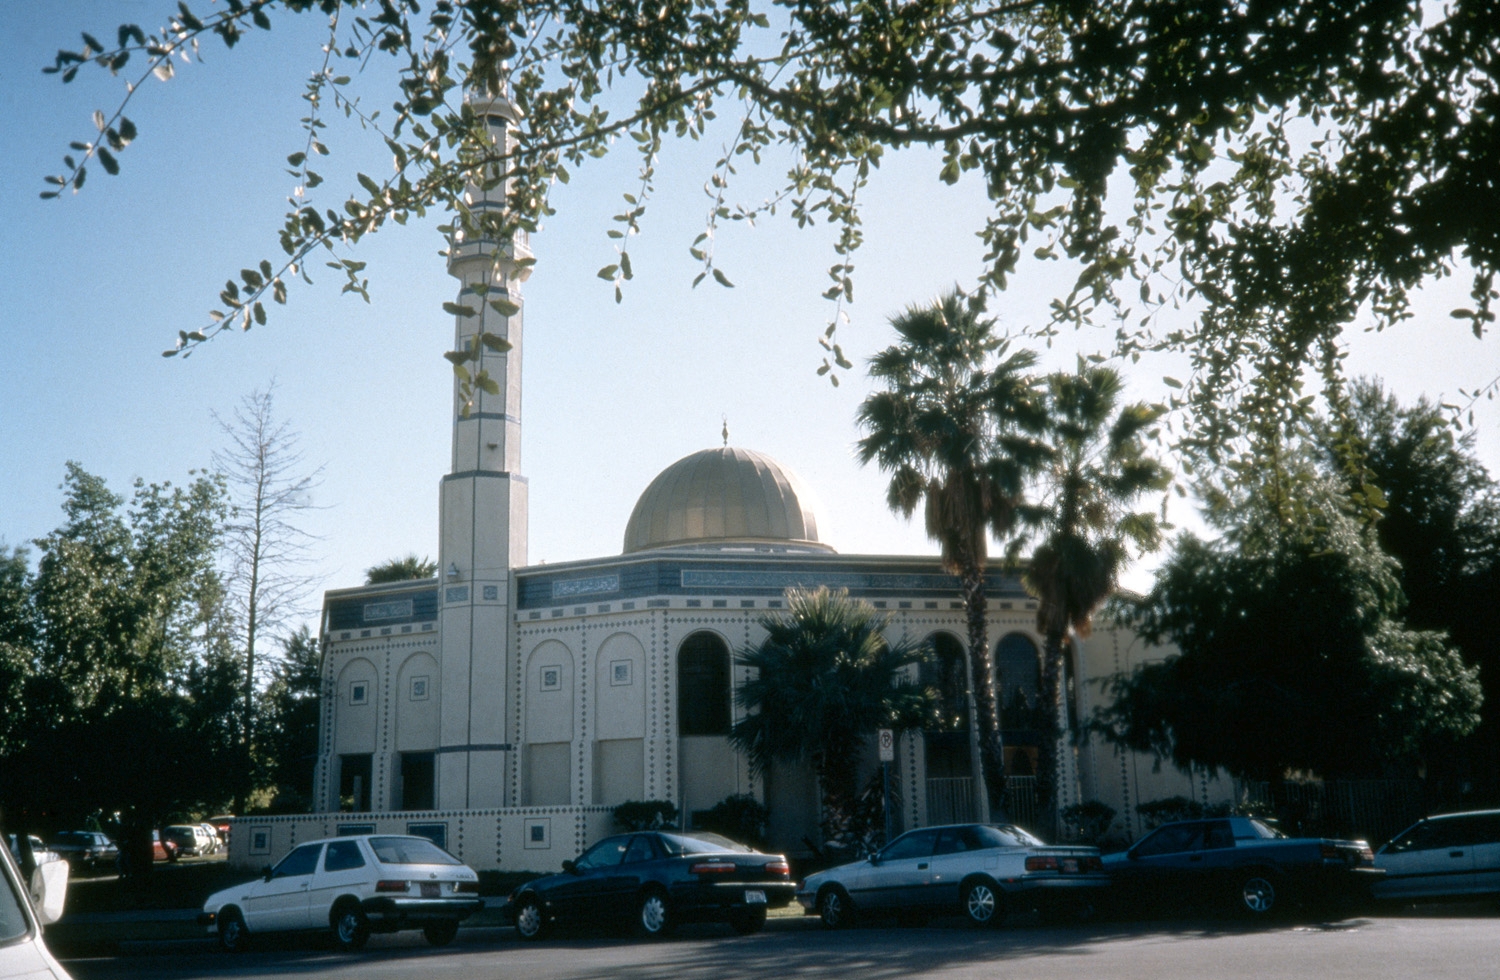 Islamic Community Center of Tempe - Exterior, view to northeast corner, with minaret